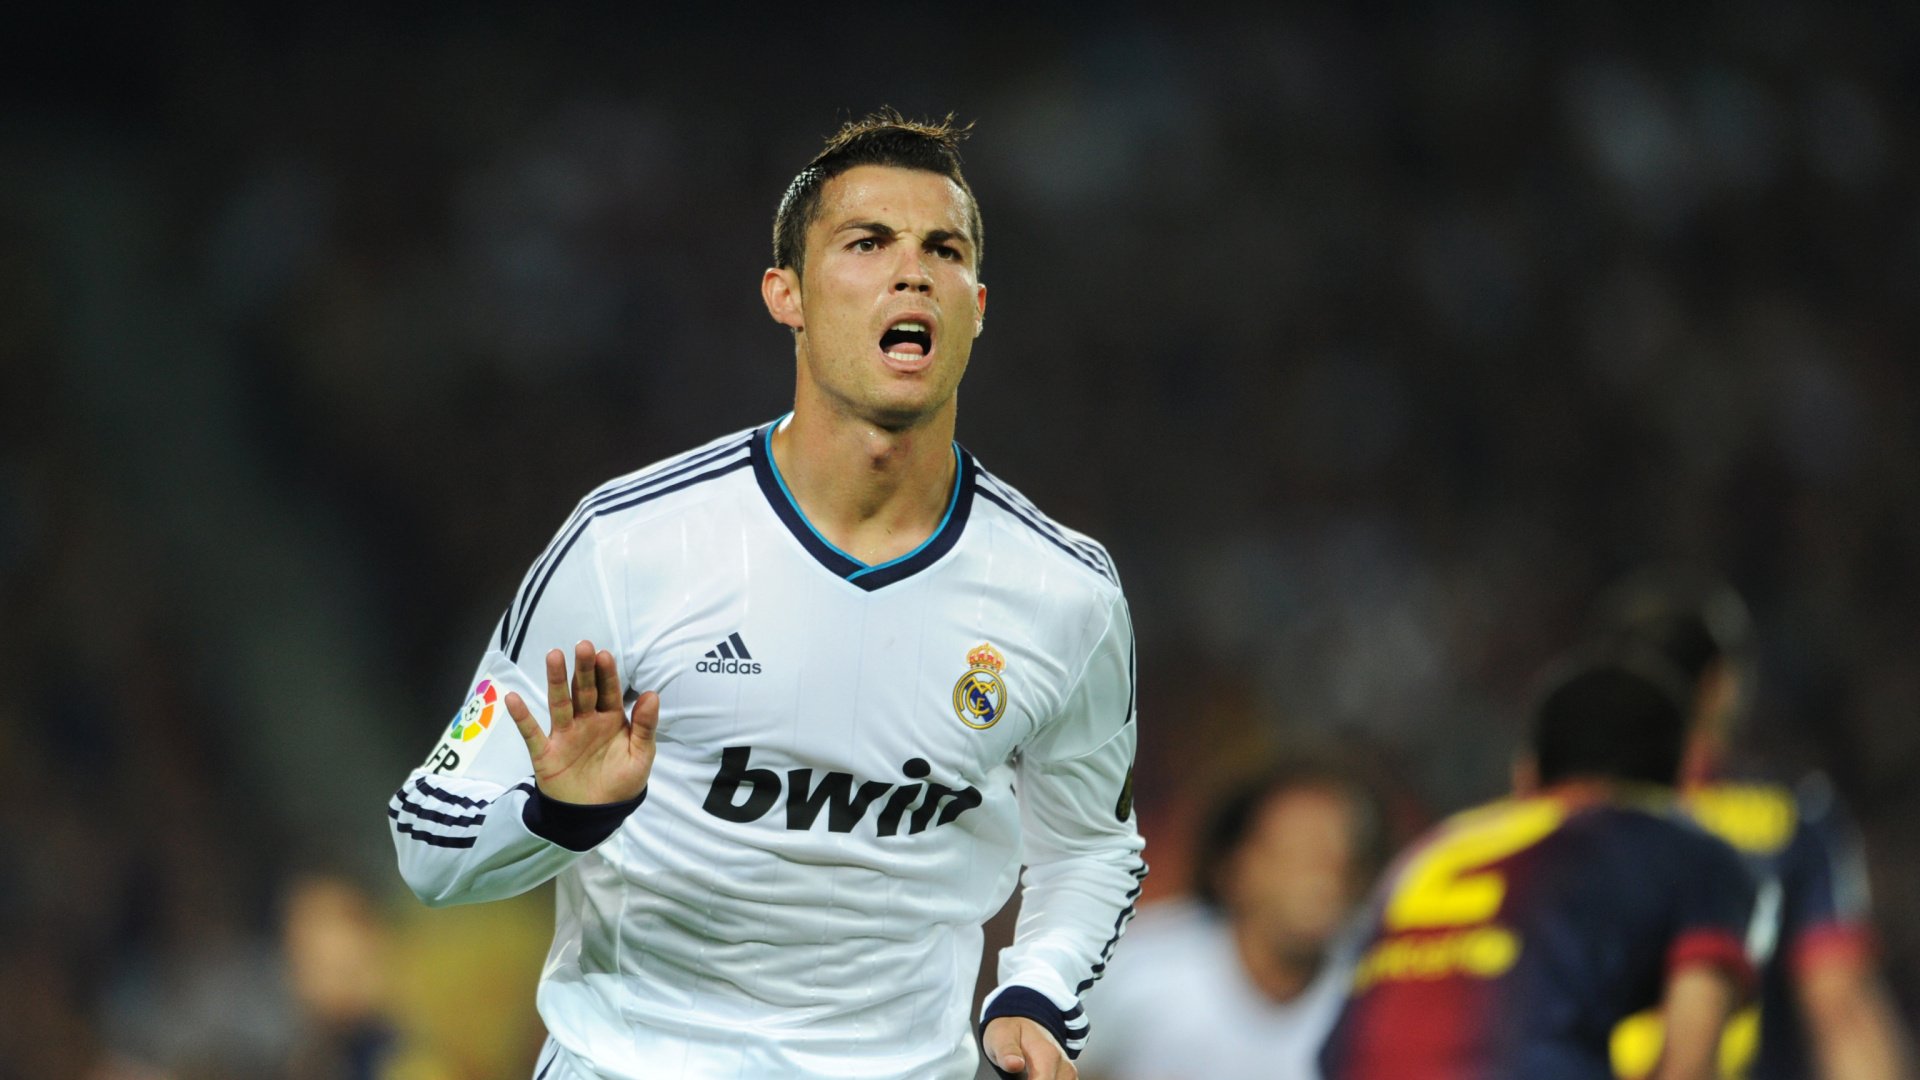 Ronaldo Wallpapers Photos And Desktop Backgrounds Up To 8K